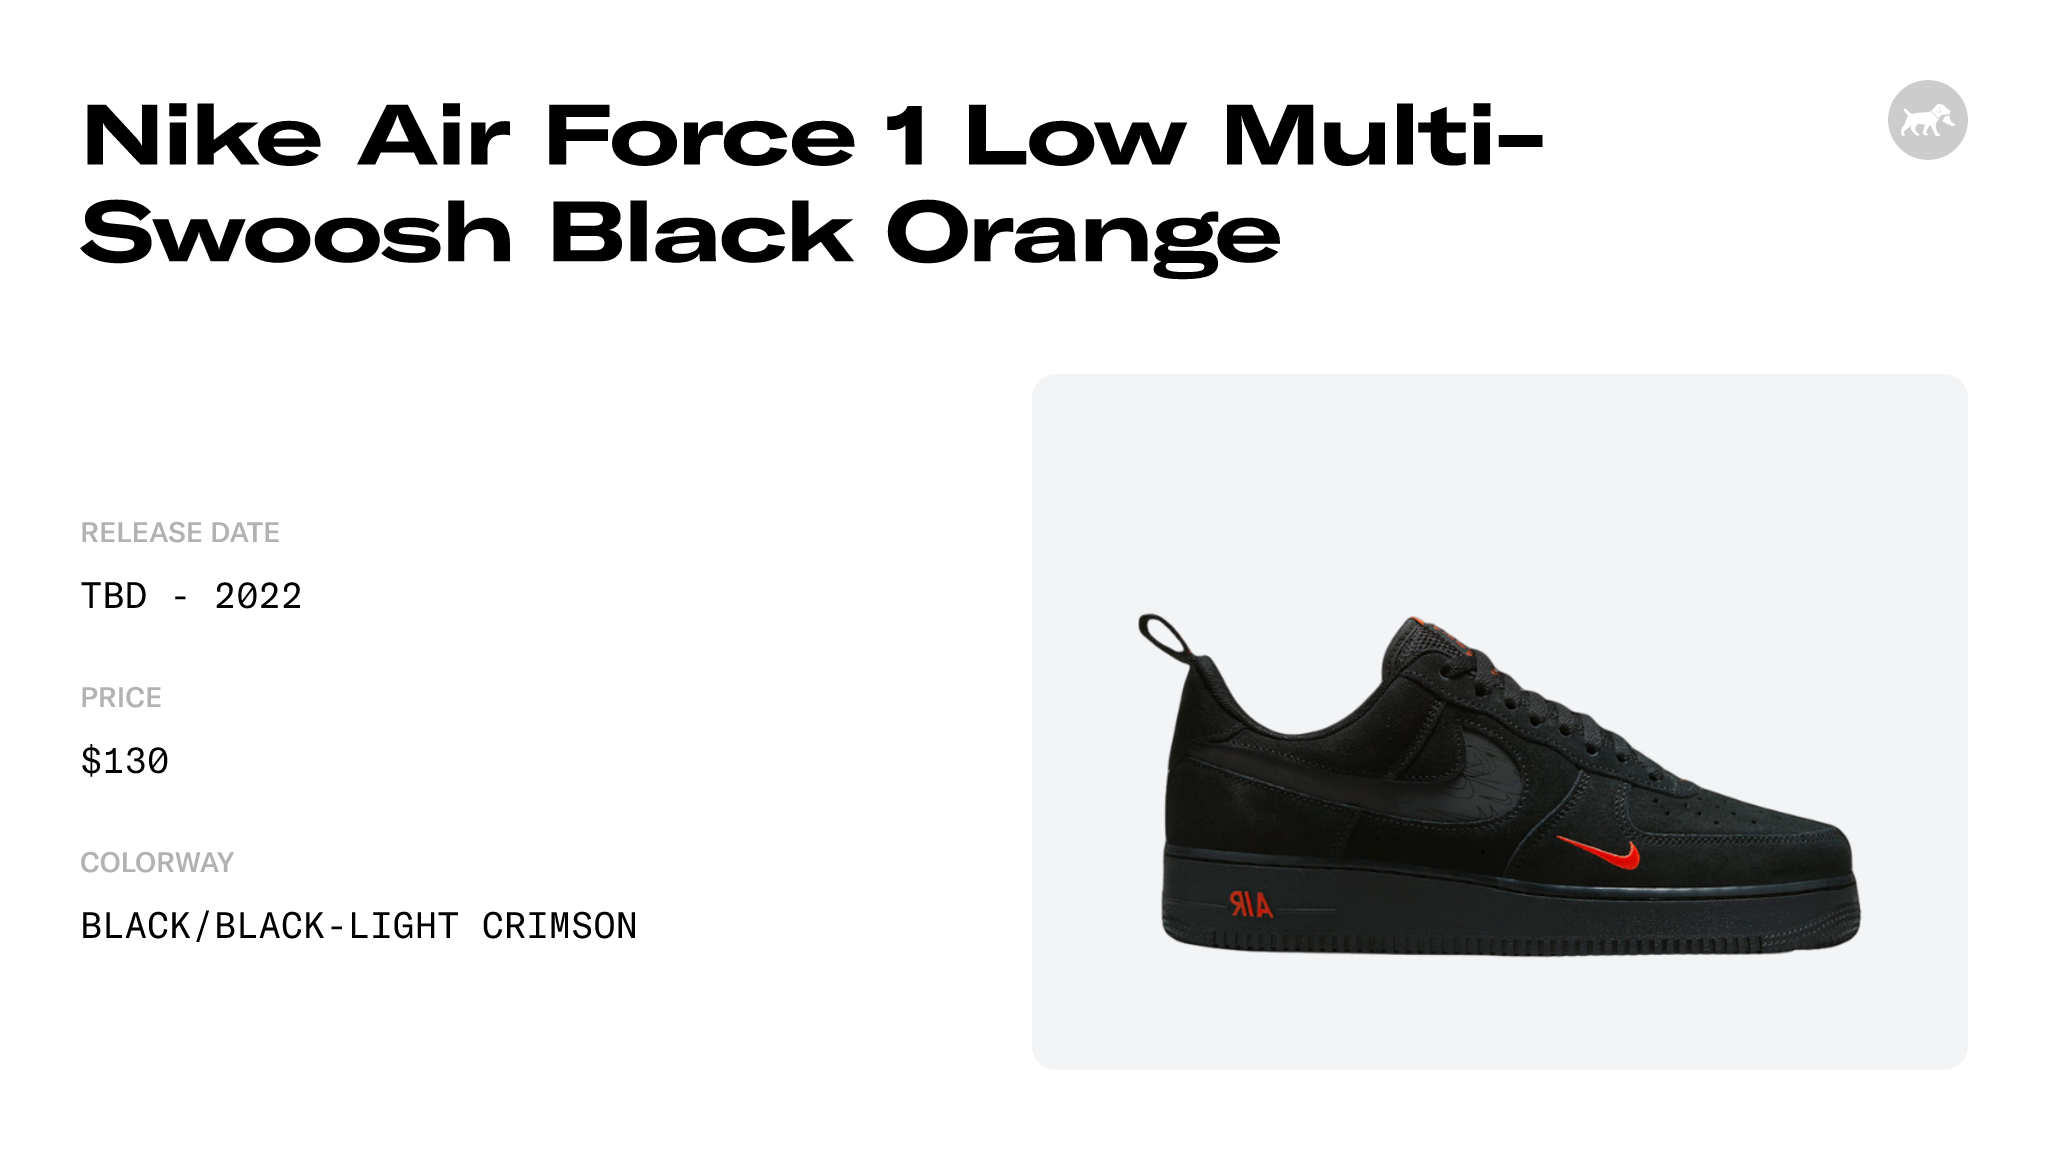 Nike Air Force 1 07 LV8 Reflective Swoosh Black Crimson, DZ4514-001